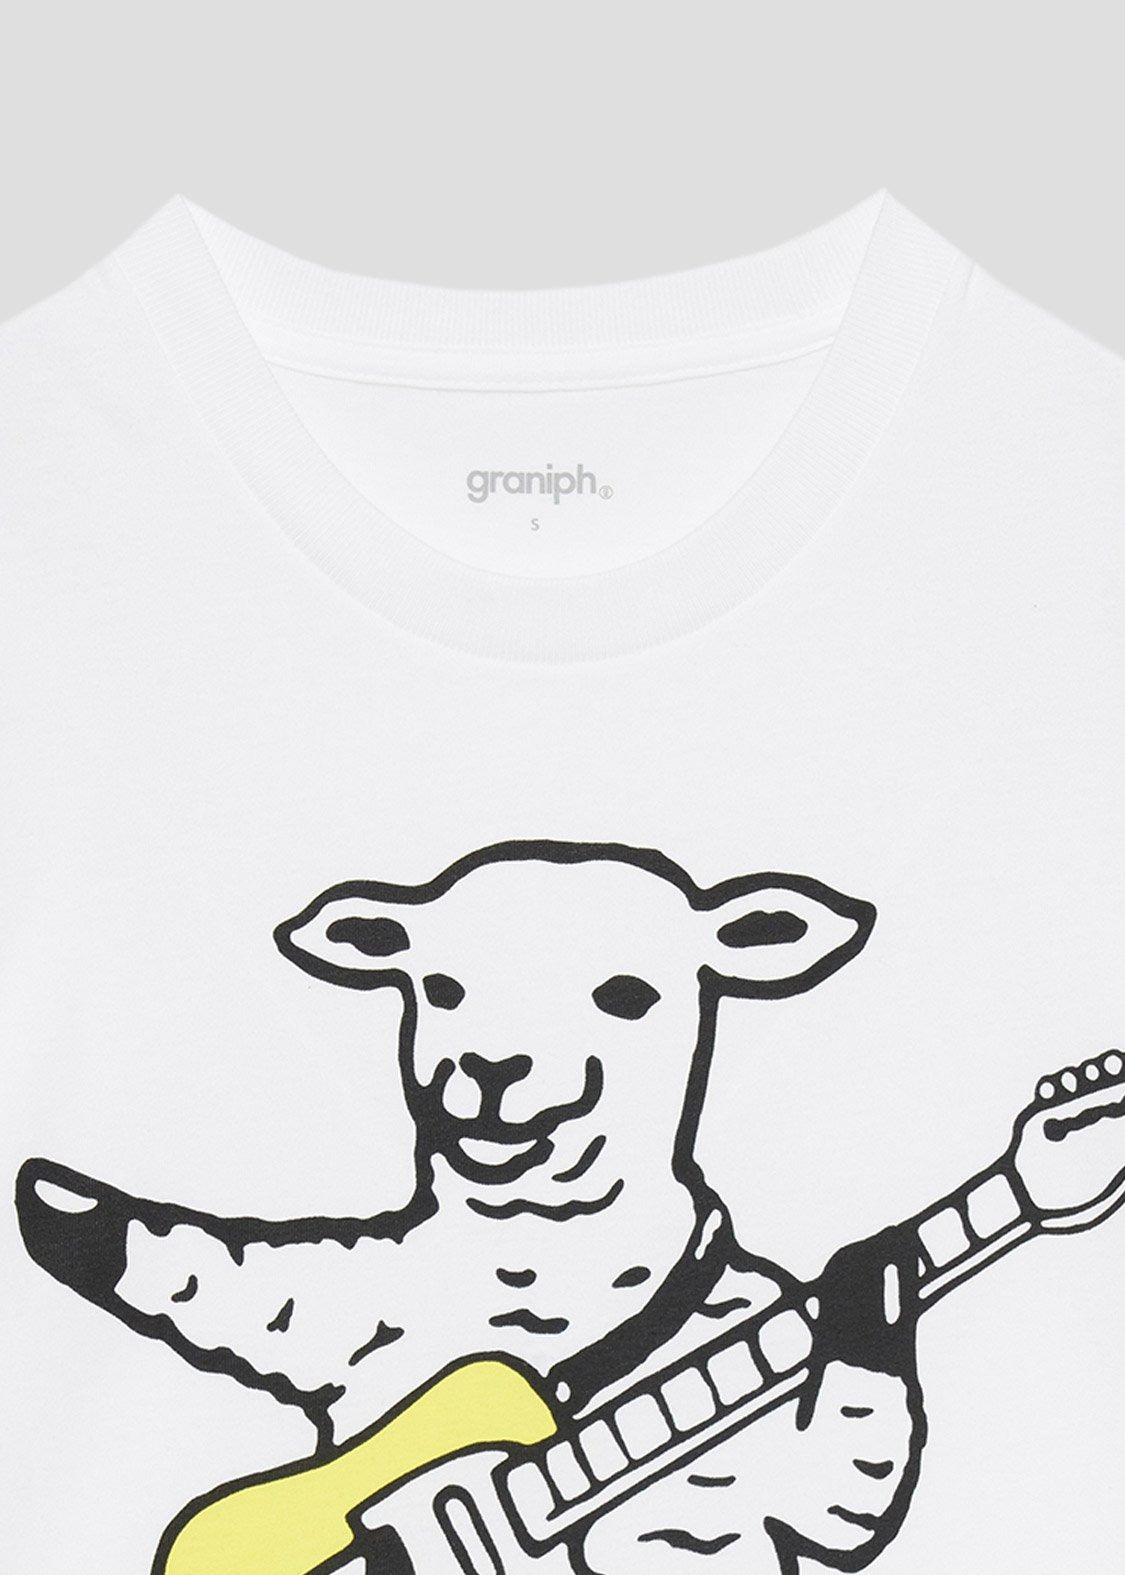 Lamb Chop with Guitar